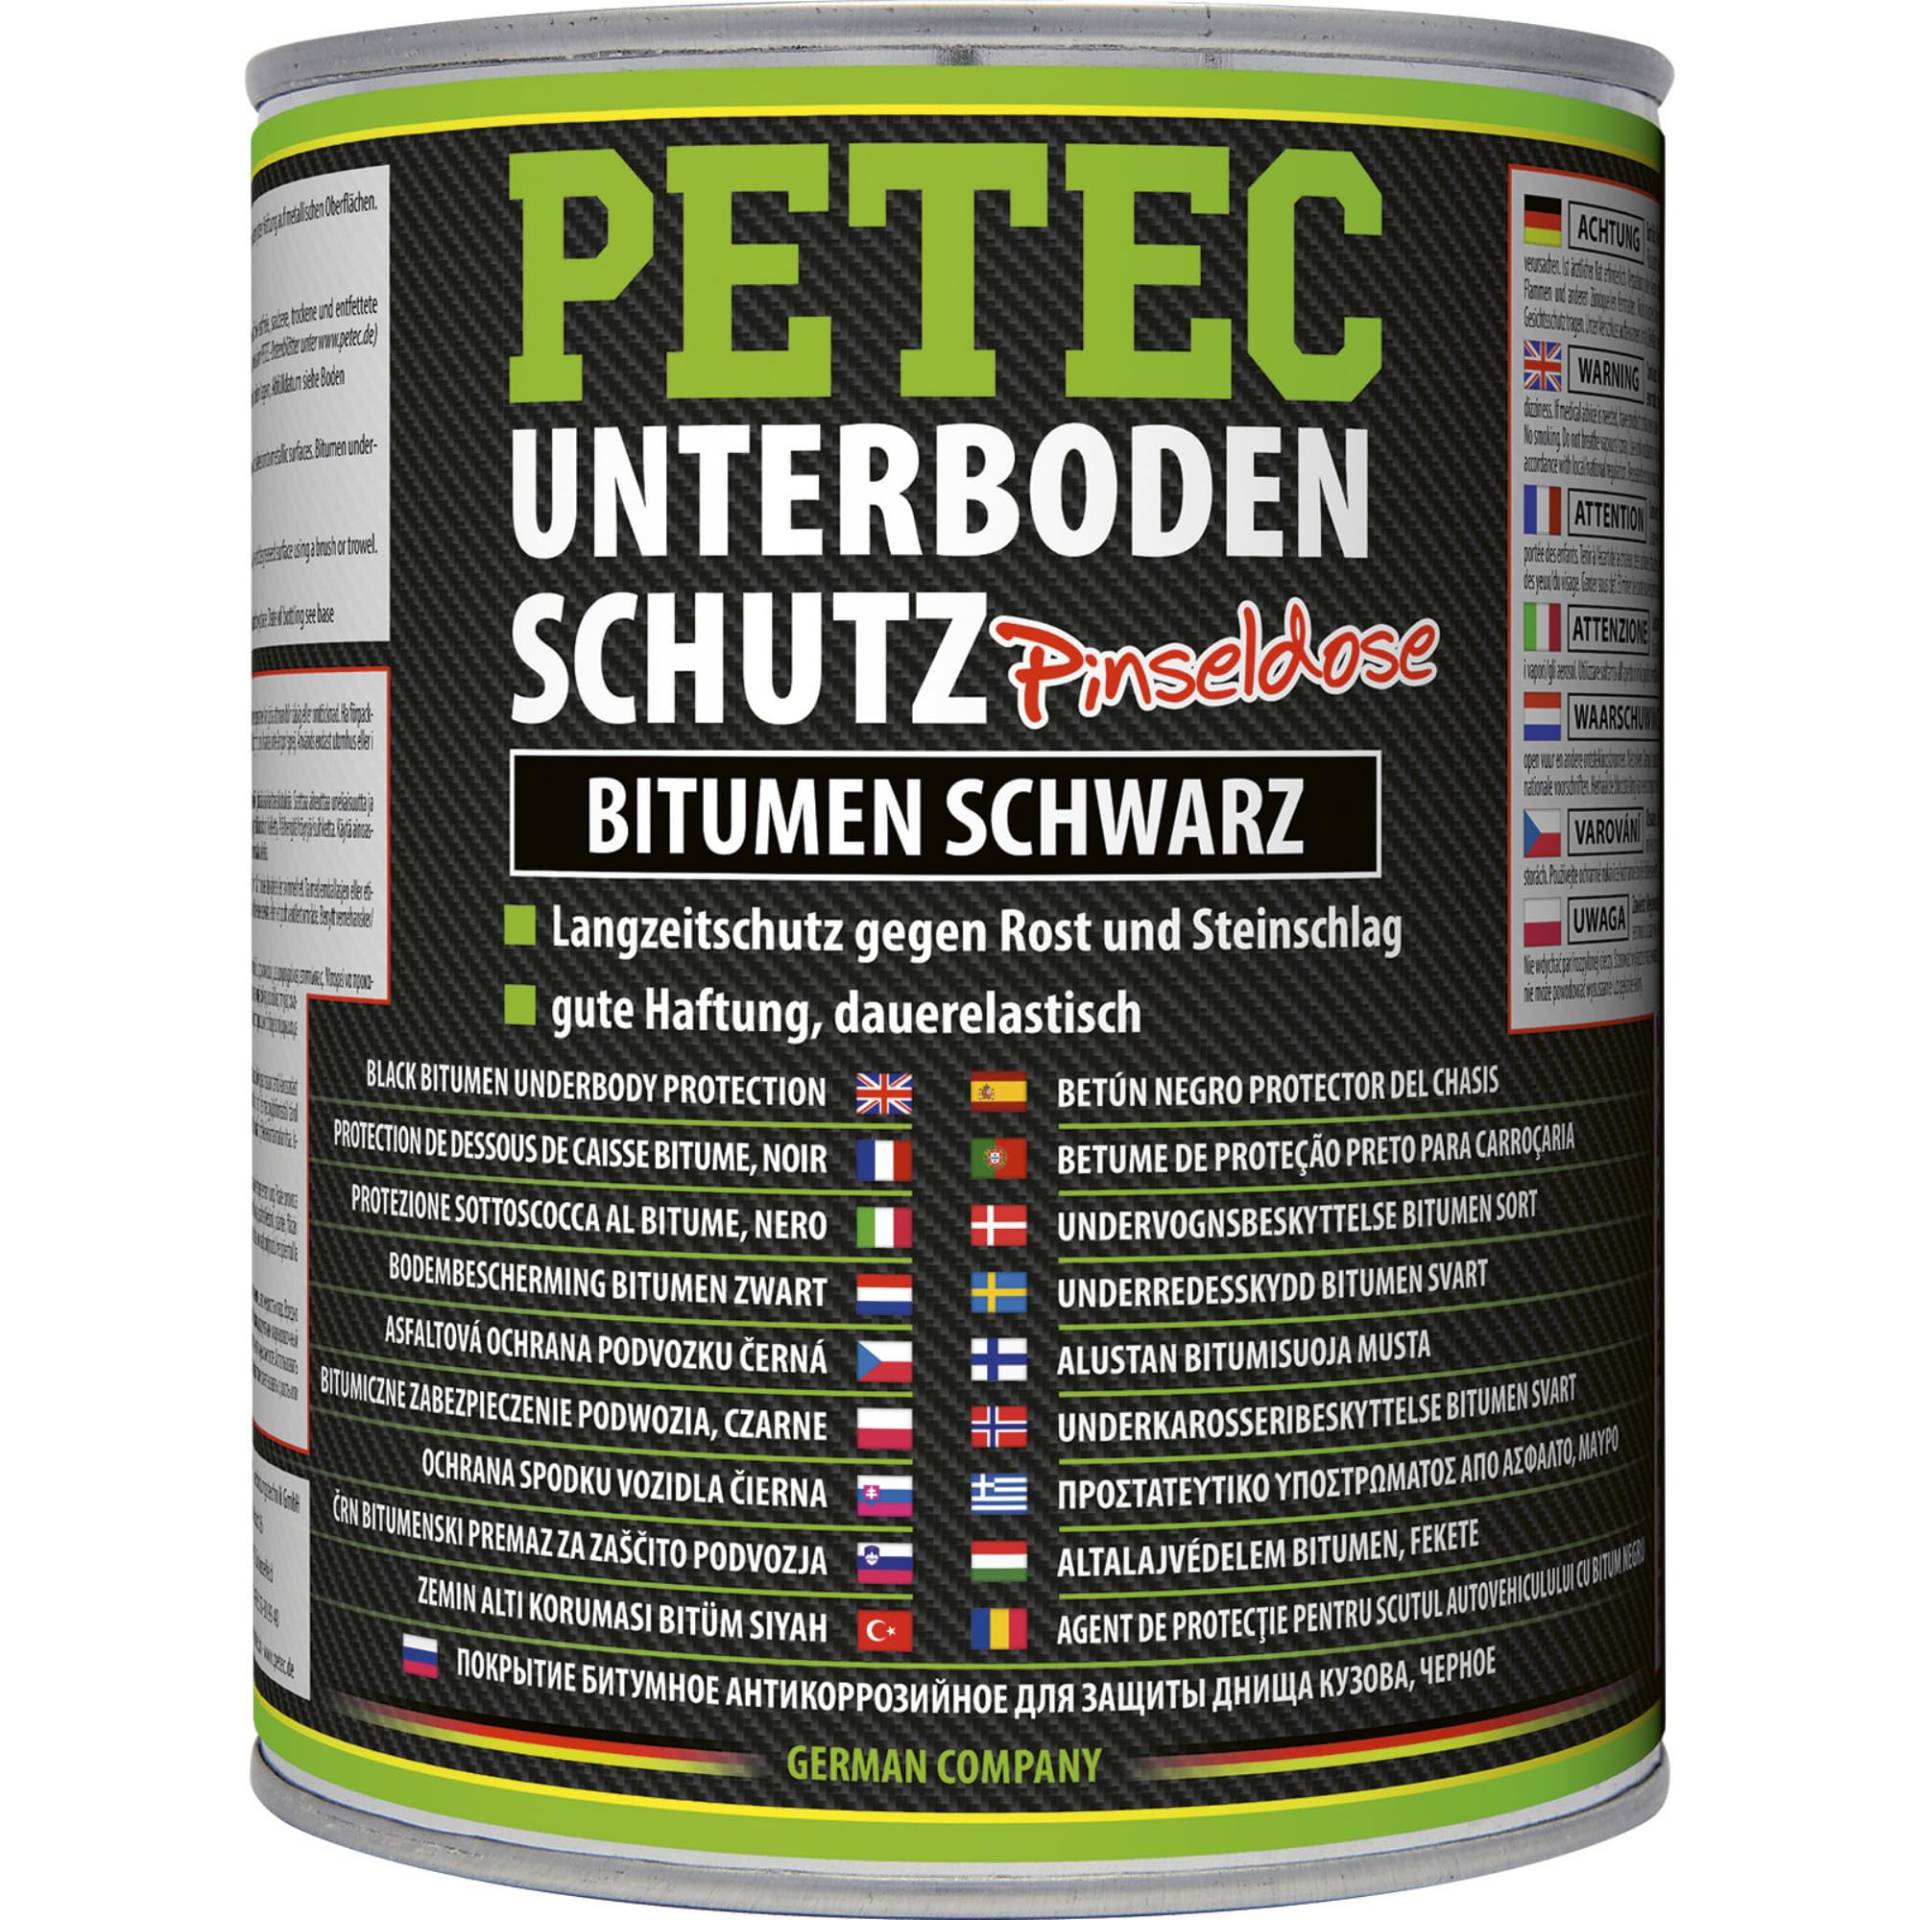 PETEC Unterbodenschutz Bitumen Pinseldose 1000 ml - 73100 von PETEC